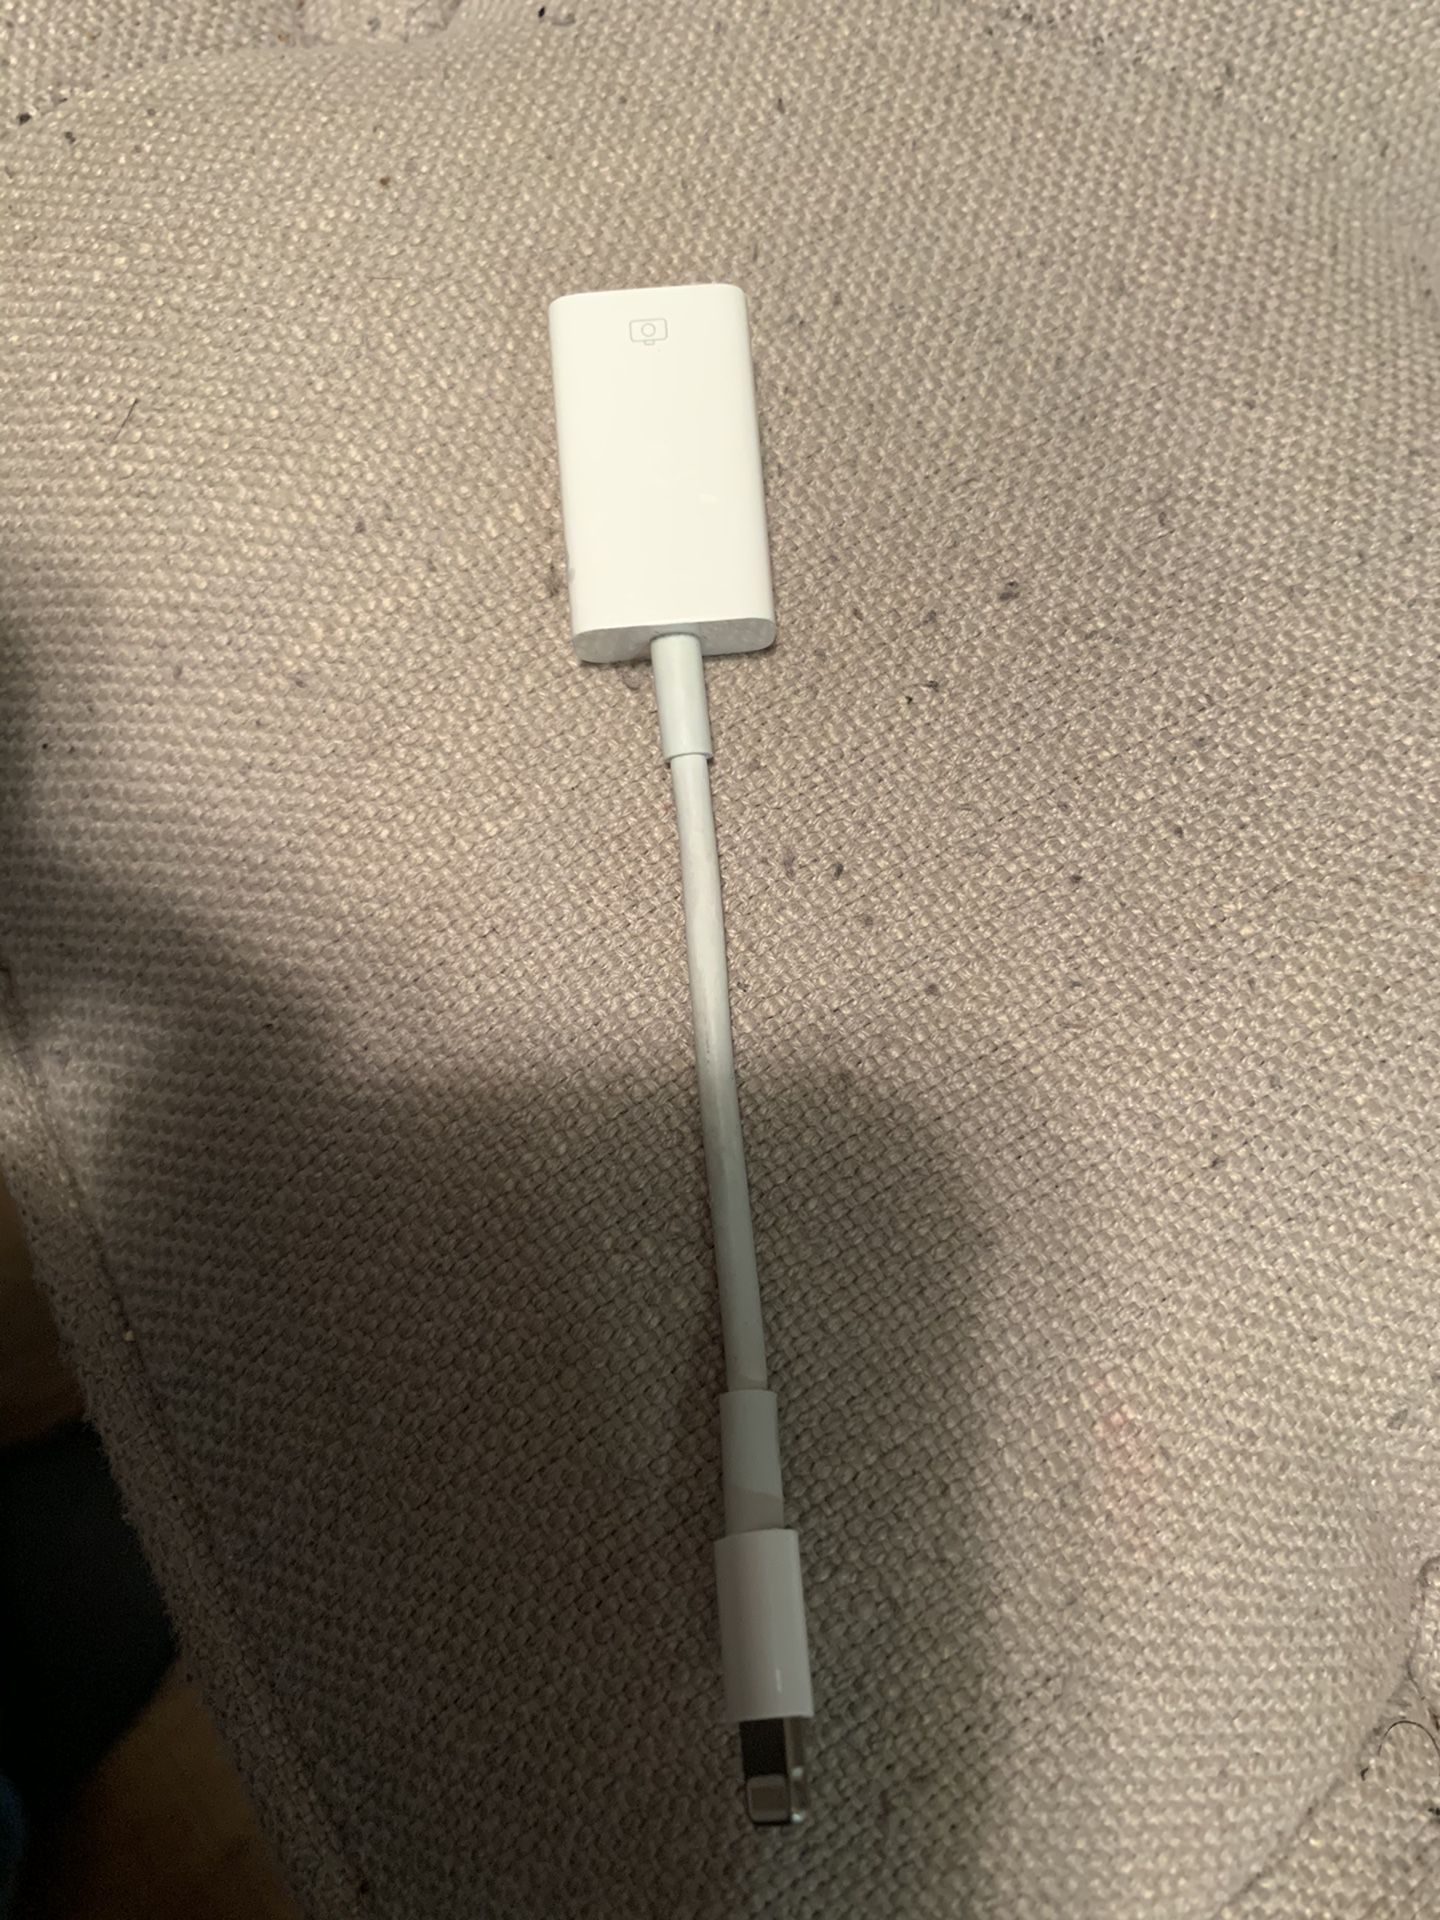 Apple USB to lightning adapter